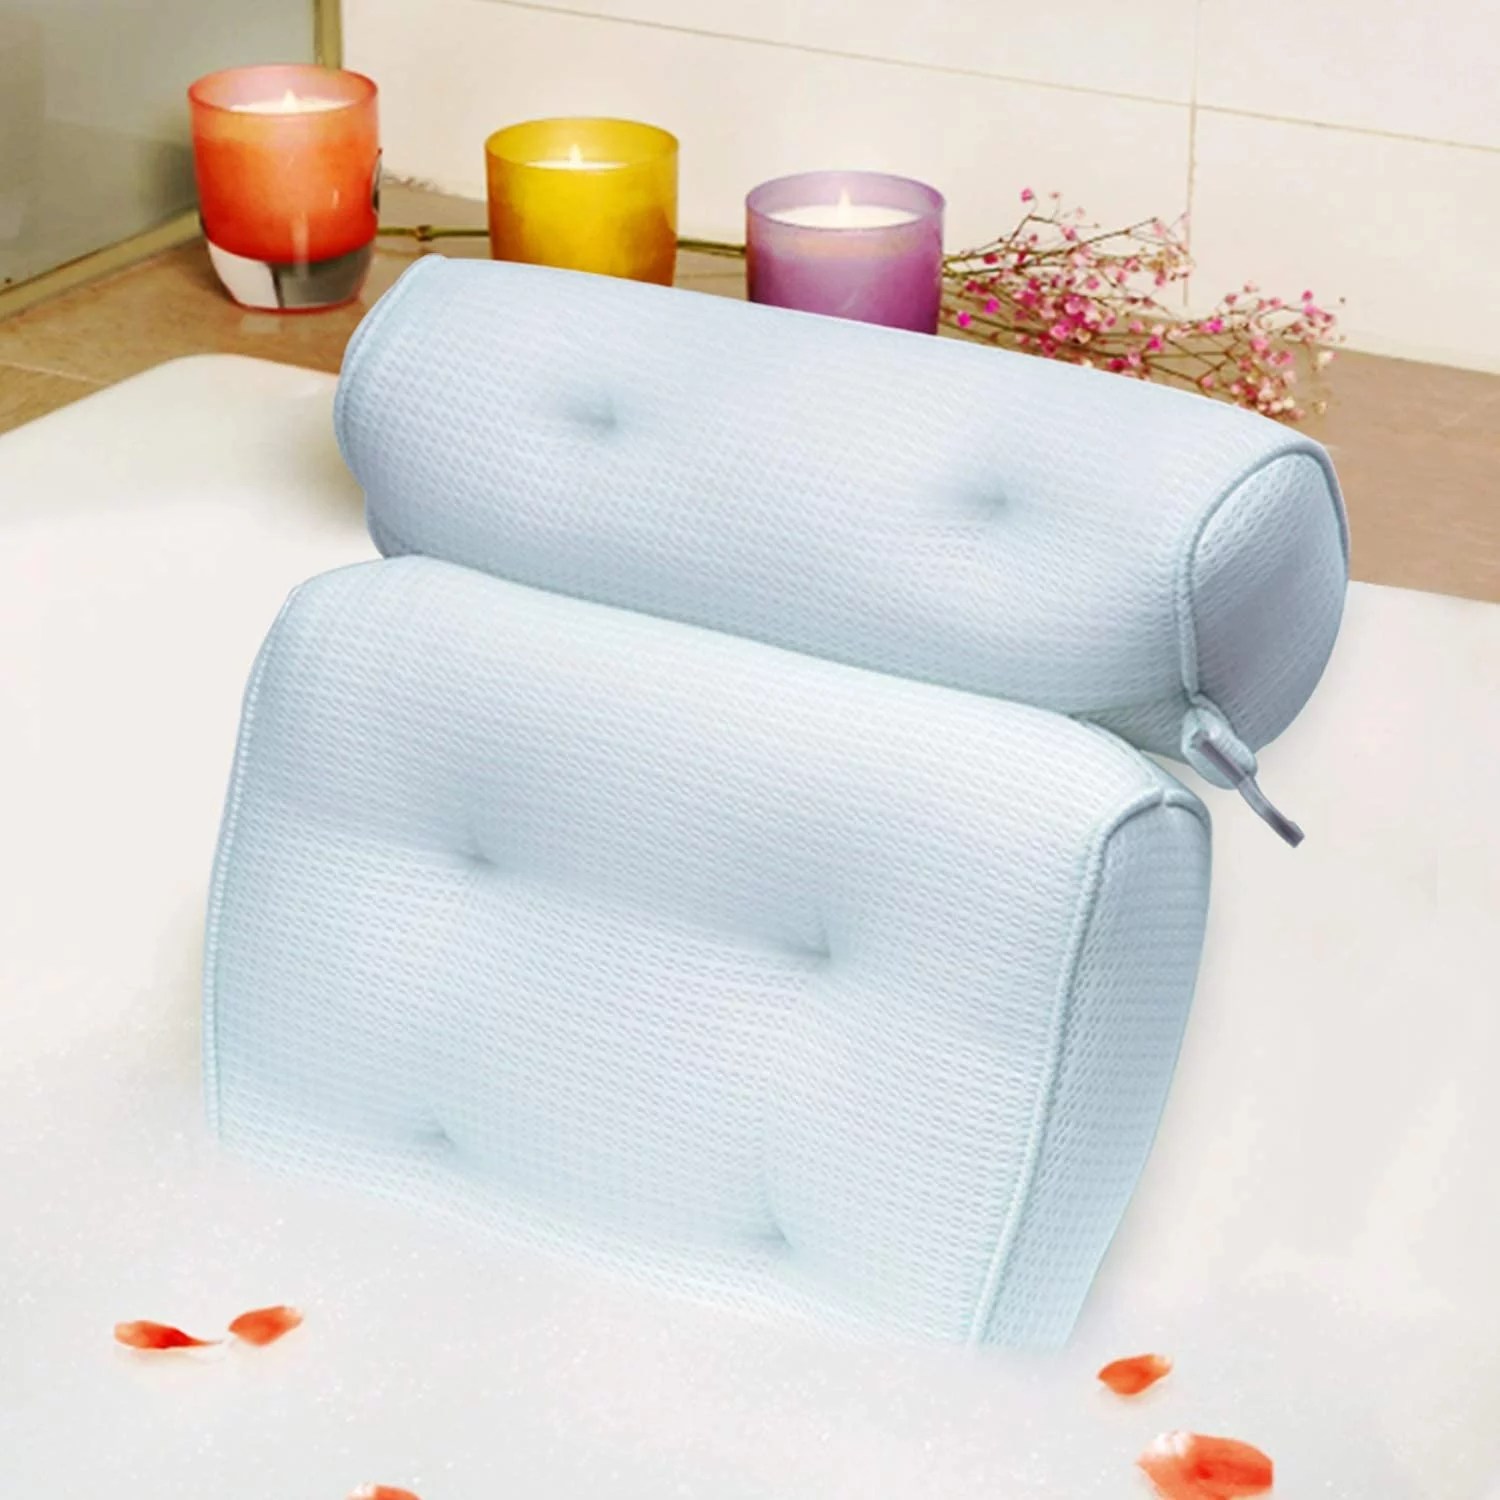 Everlasting Comfort Luxury Bath Pillow - Head, Neck, Back Support